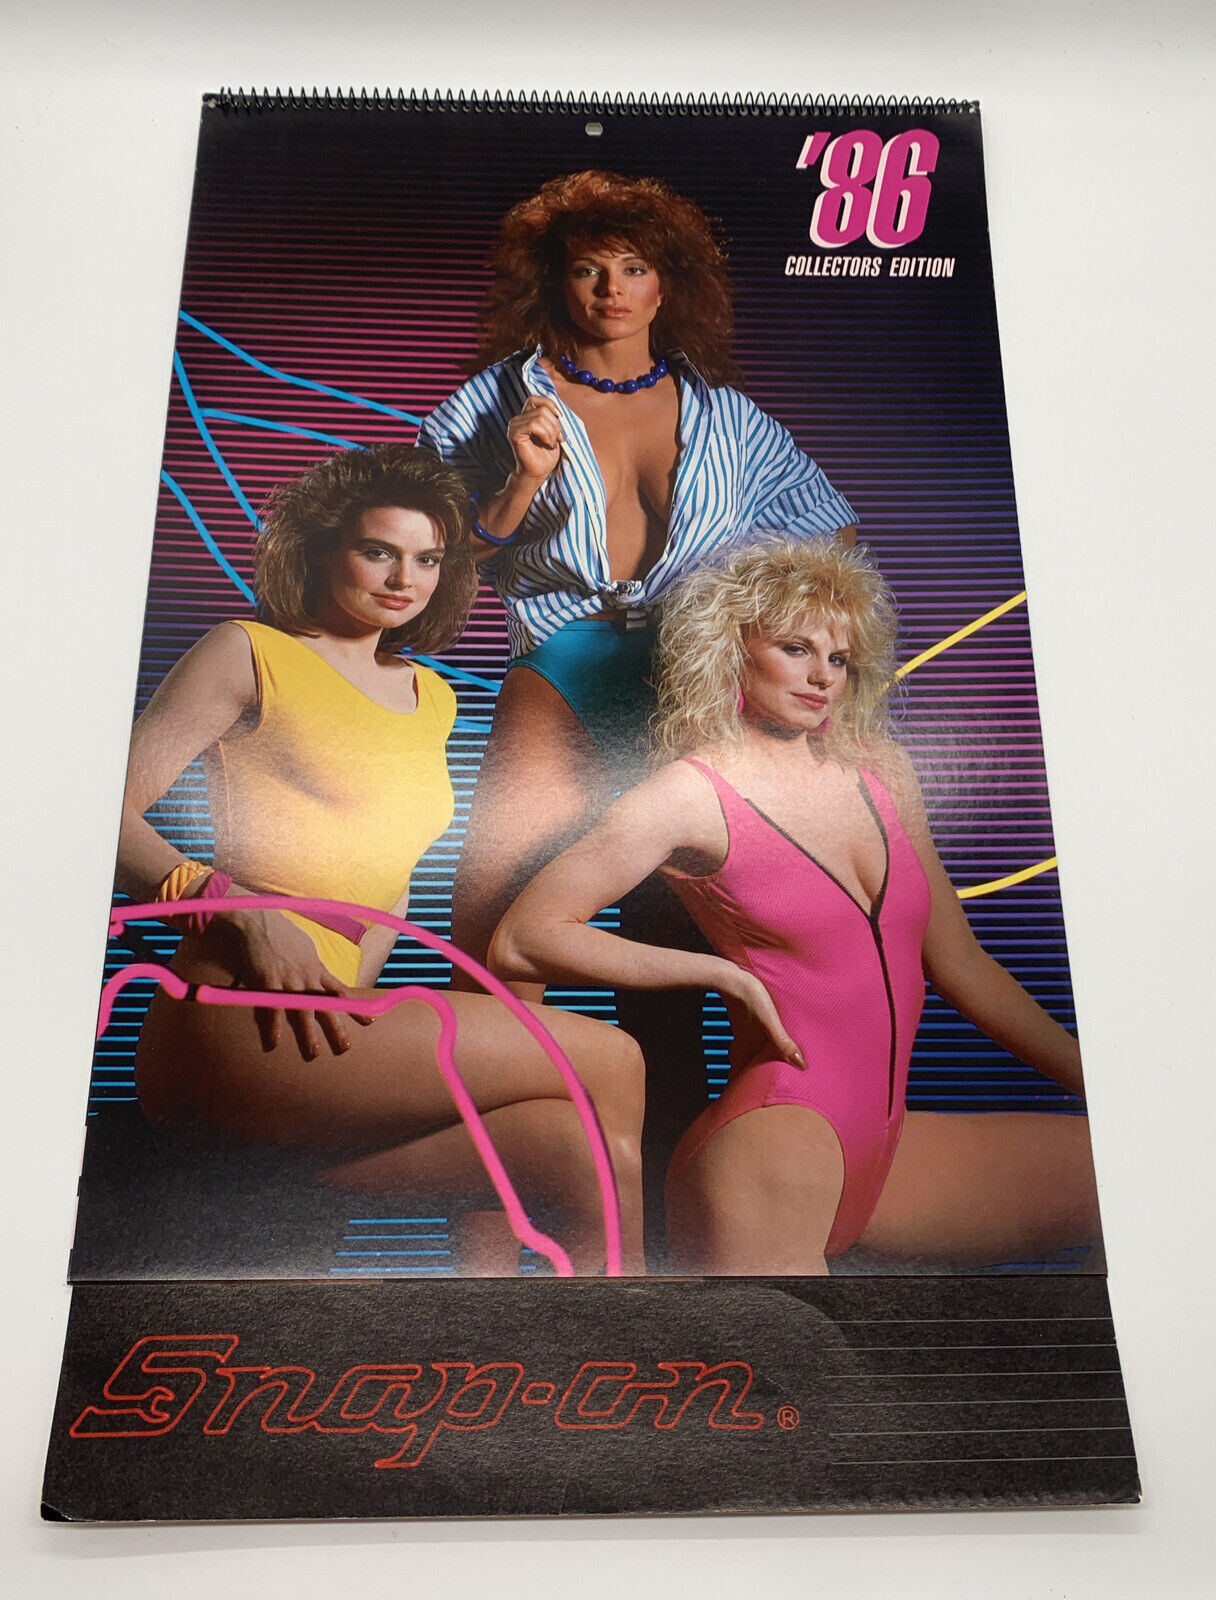 Vtg Snap-On Collectors Edition 1986 Swimsuit Shop Calendar Gear heads Read